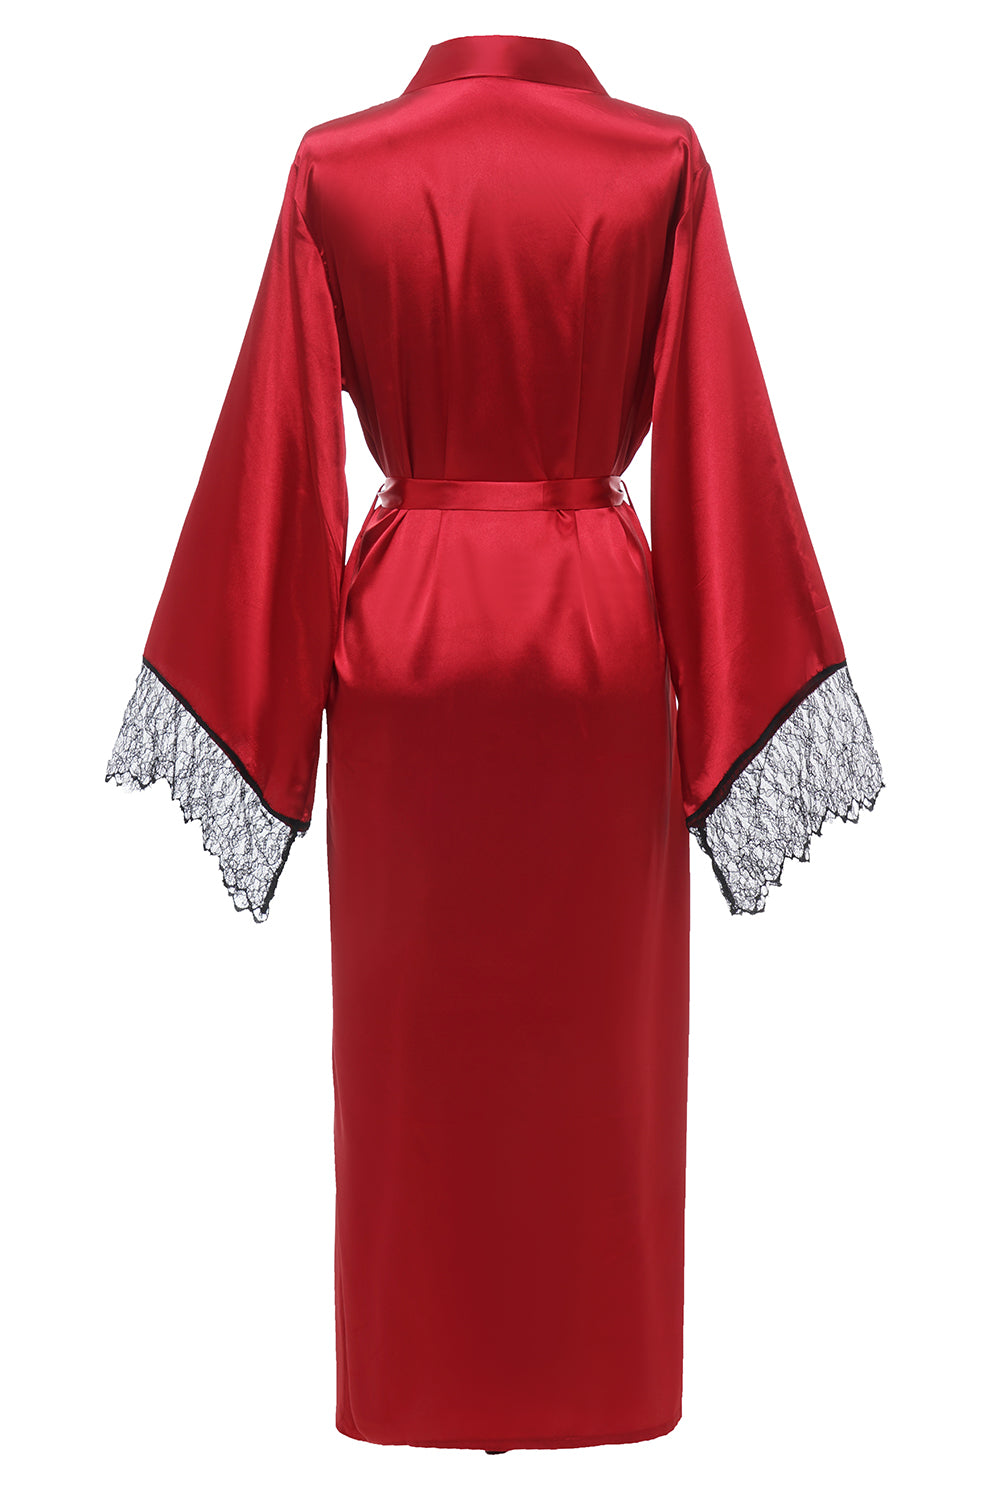 Dark Red Bridesamaid Robe With Lace